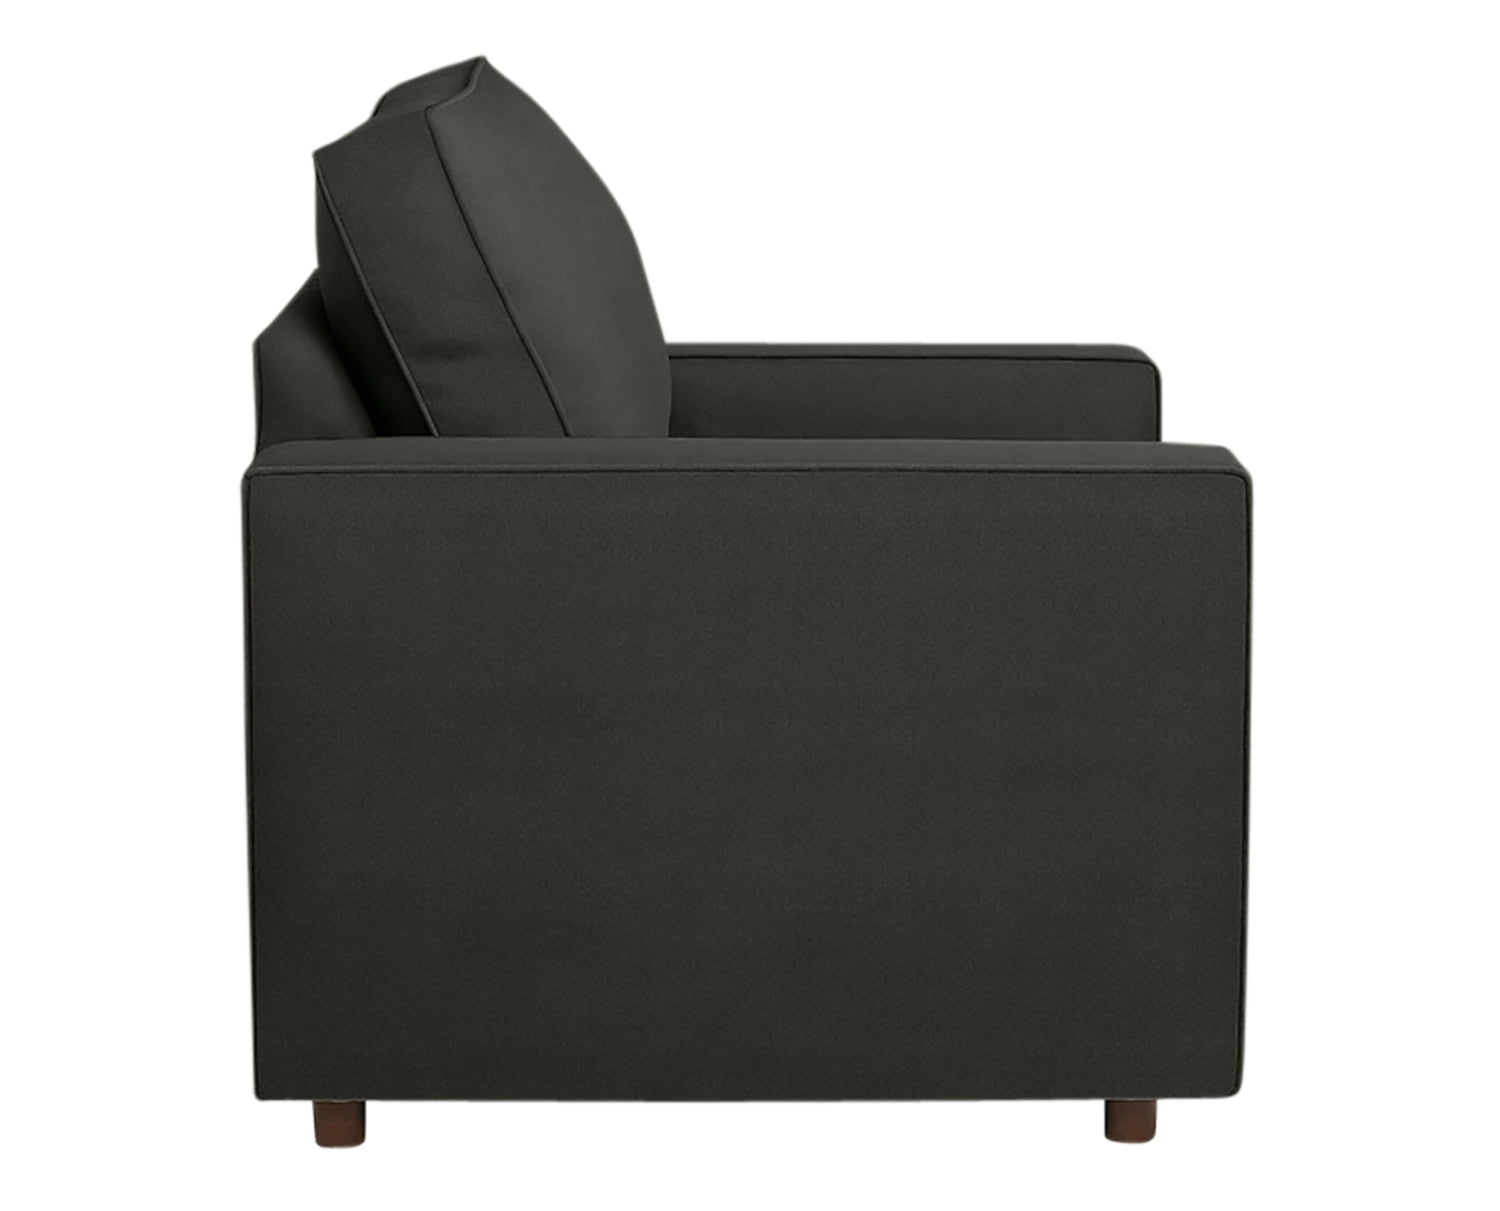 Taft Fabric Truffle | Camden York Sofa | Valley Ridge Furniture